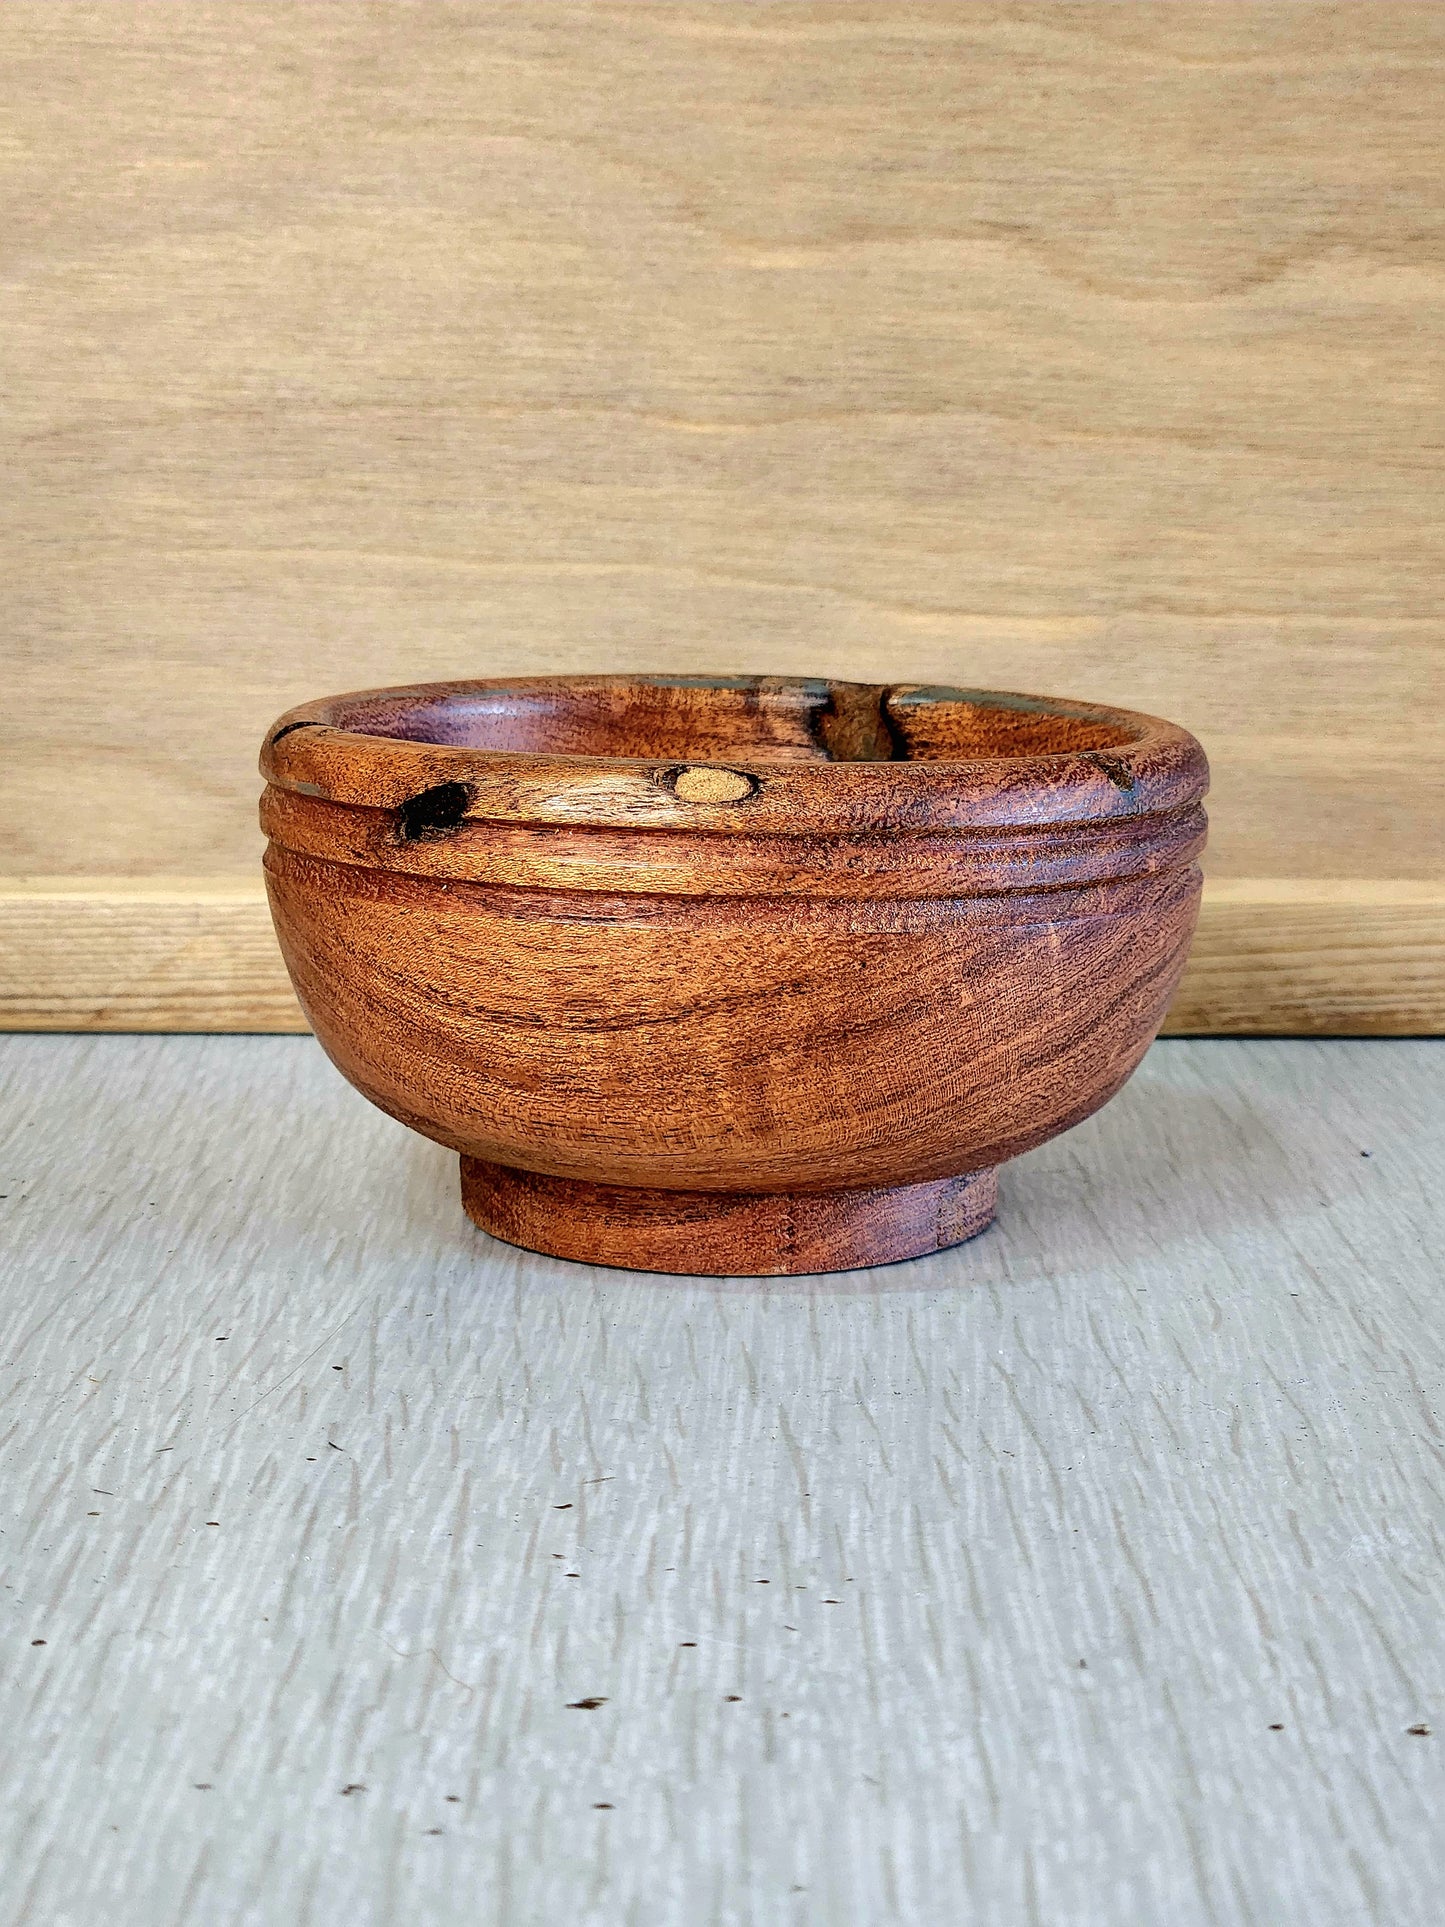 Small Wooden Bowls - Variety